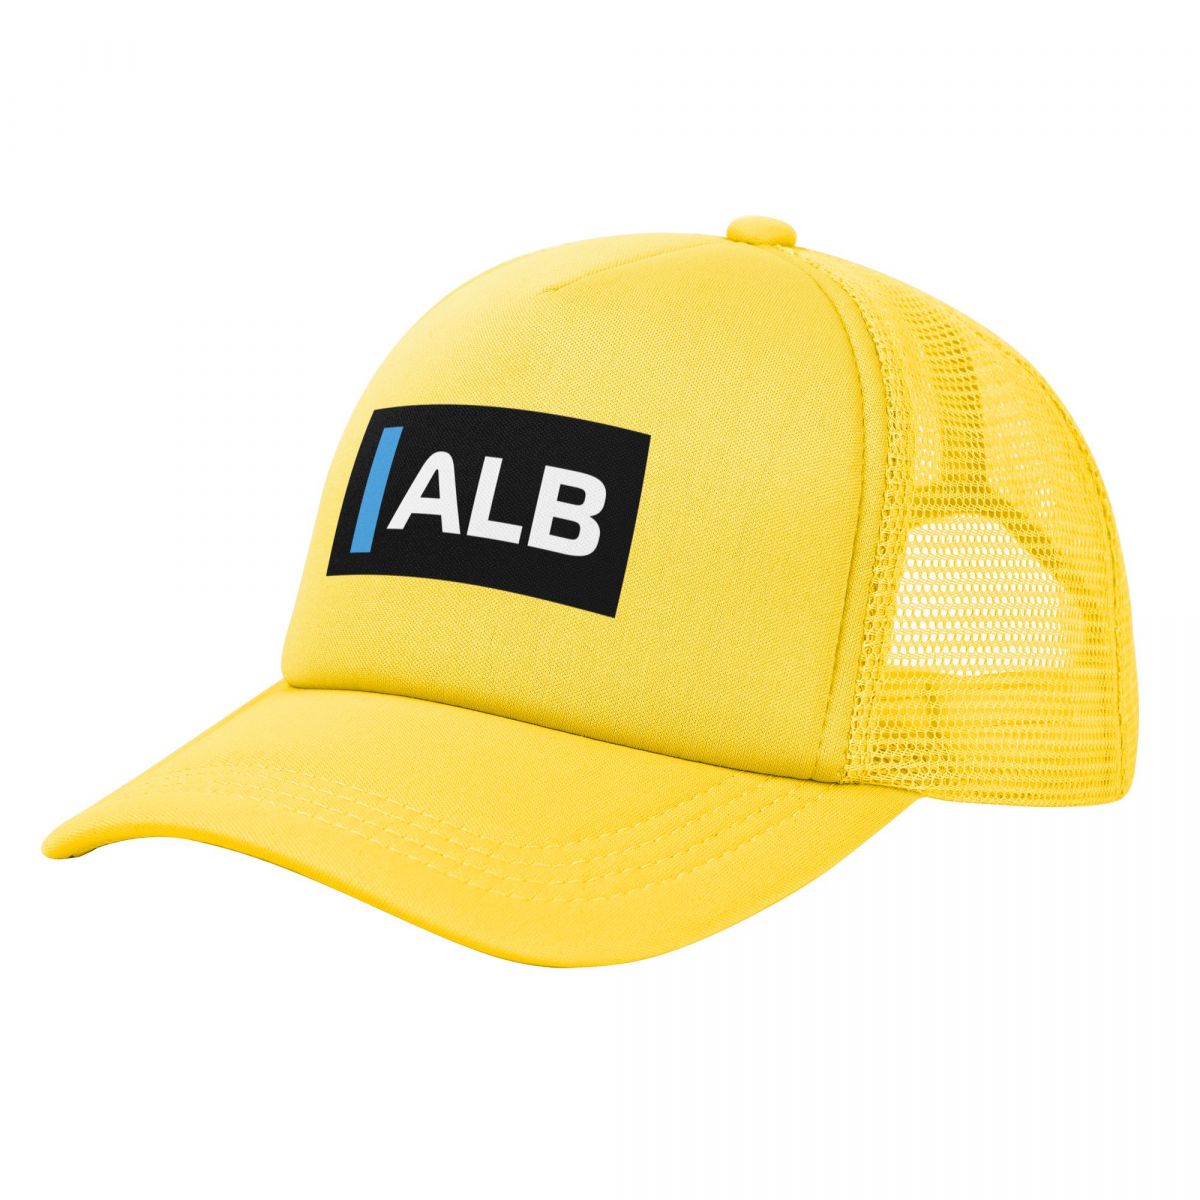 F1 Williams Team Driver Alex Albon Alb Baseball Cap Unisex Fan Merchandise